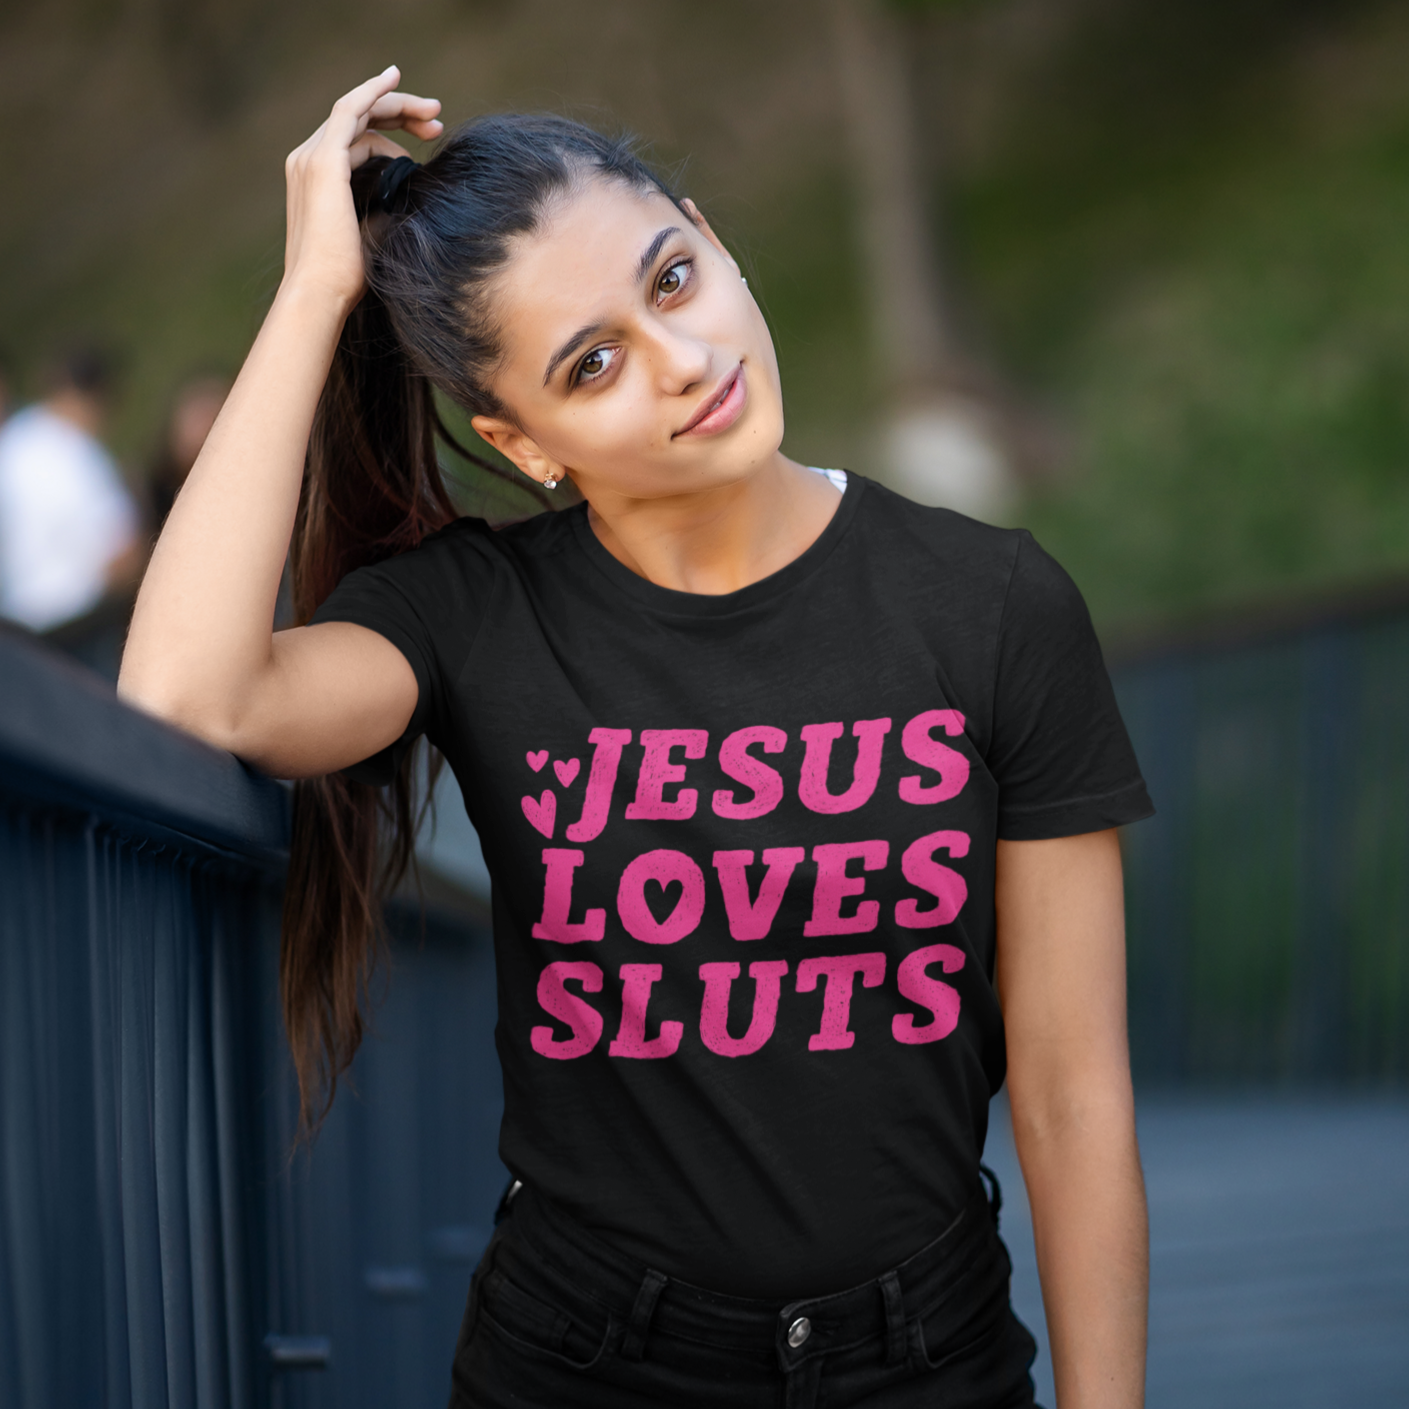 Women's rights t-shirt in black asserting 'Jesus Loves Sluts